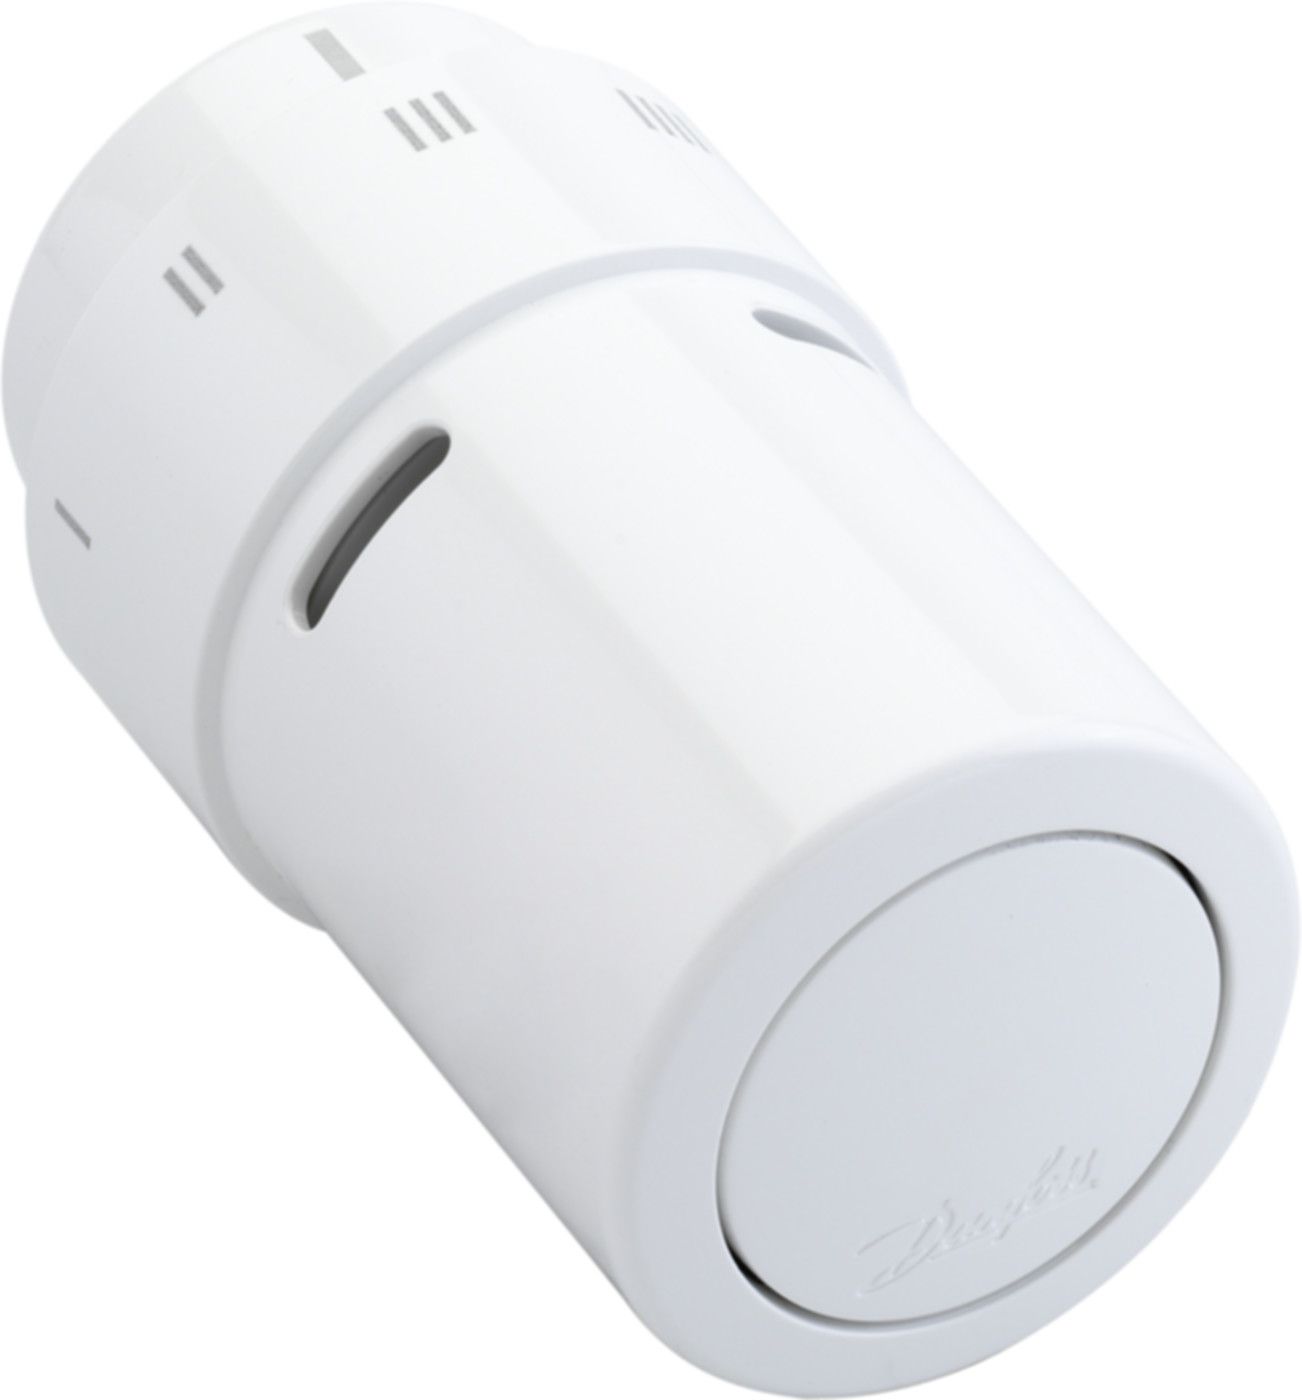 Design-Thermostatfühler Fühler eingeb. RAX Chrom 013G6170 - Danfoss Programm